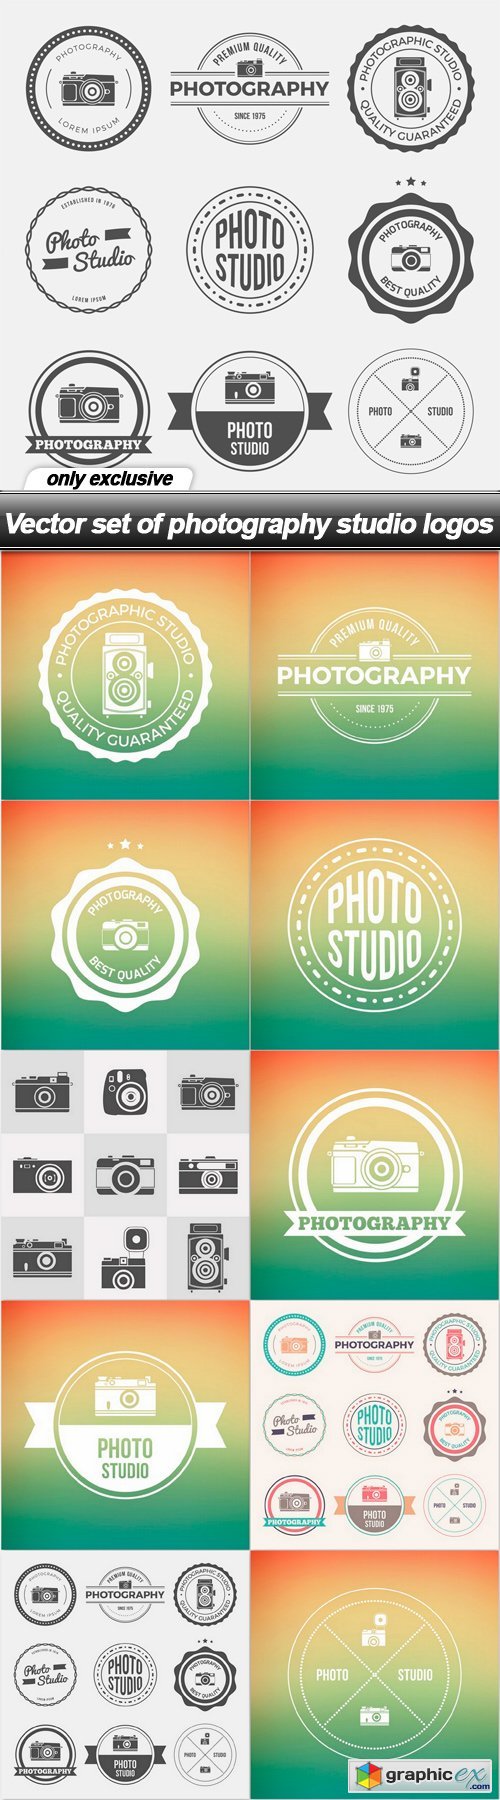 set of photography studio logos - 10 EPS